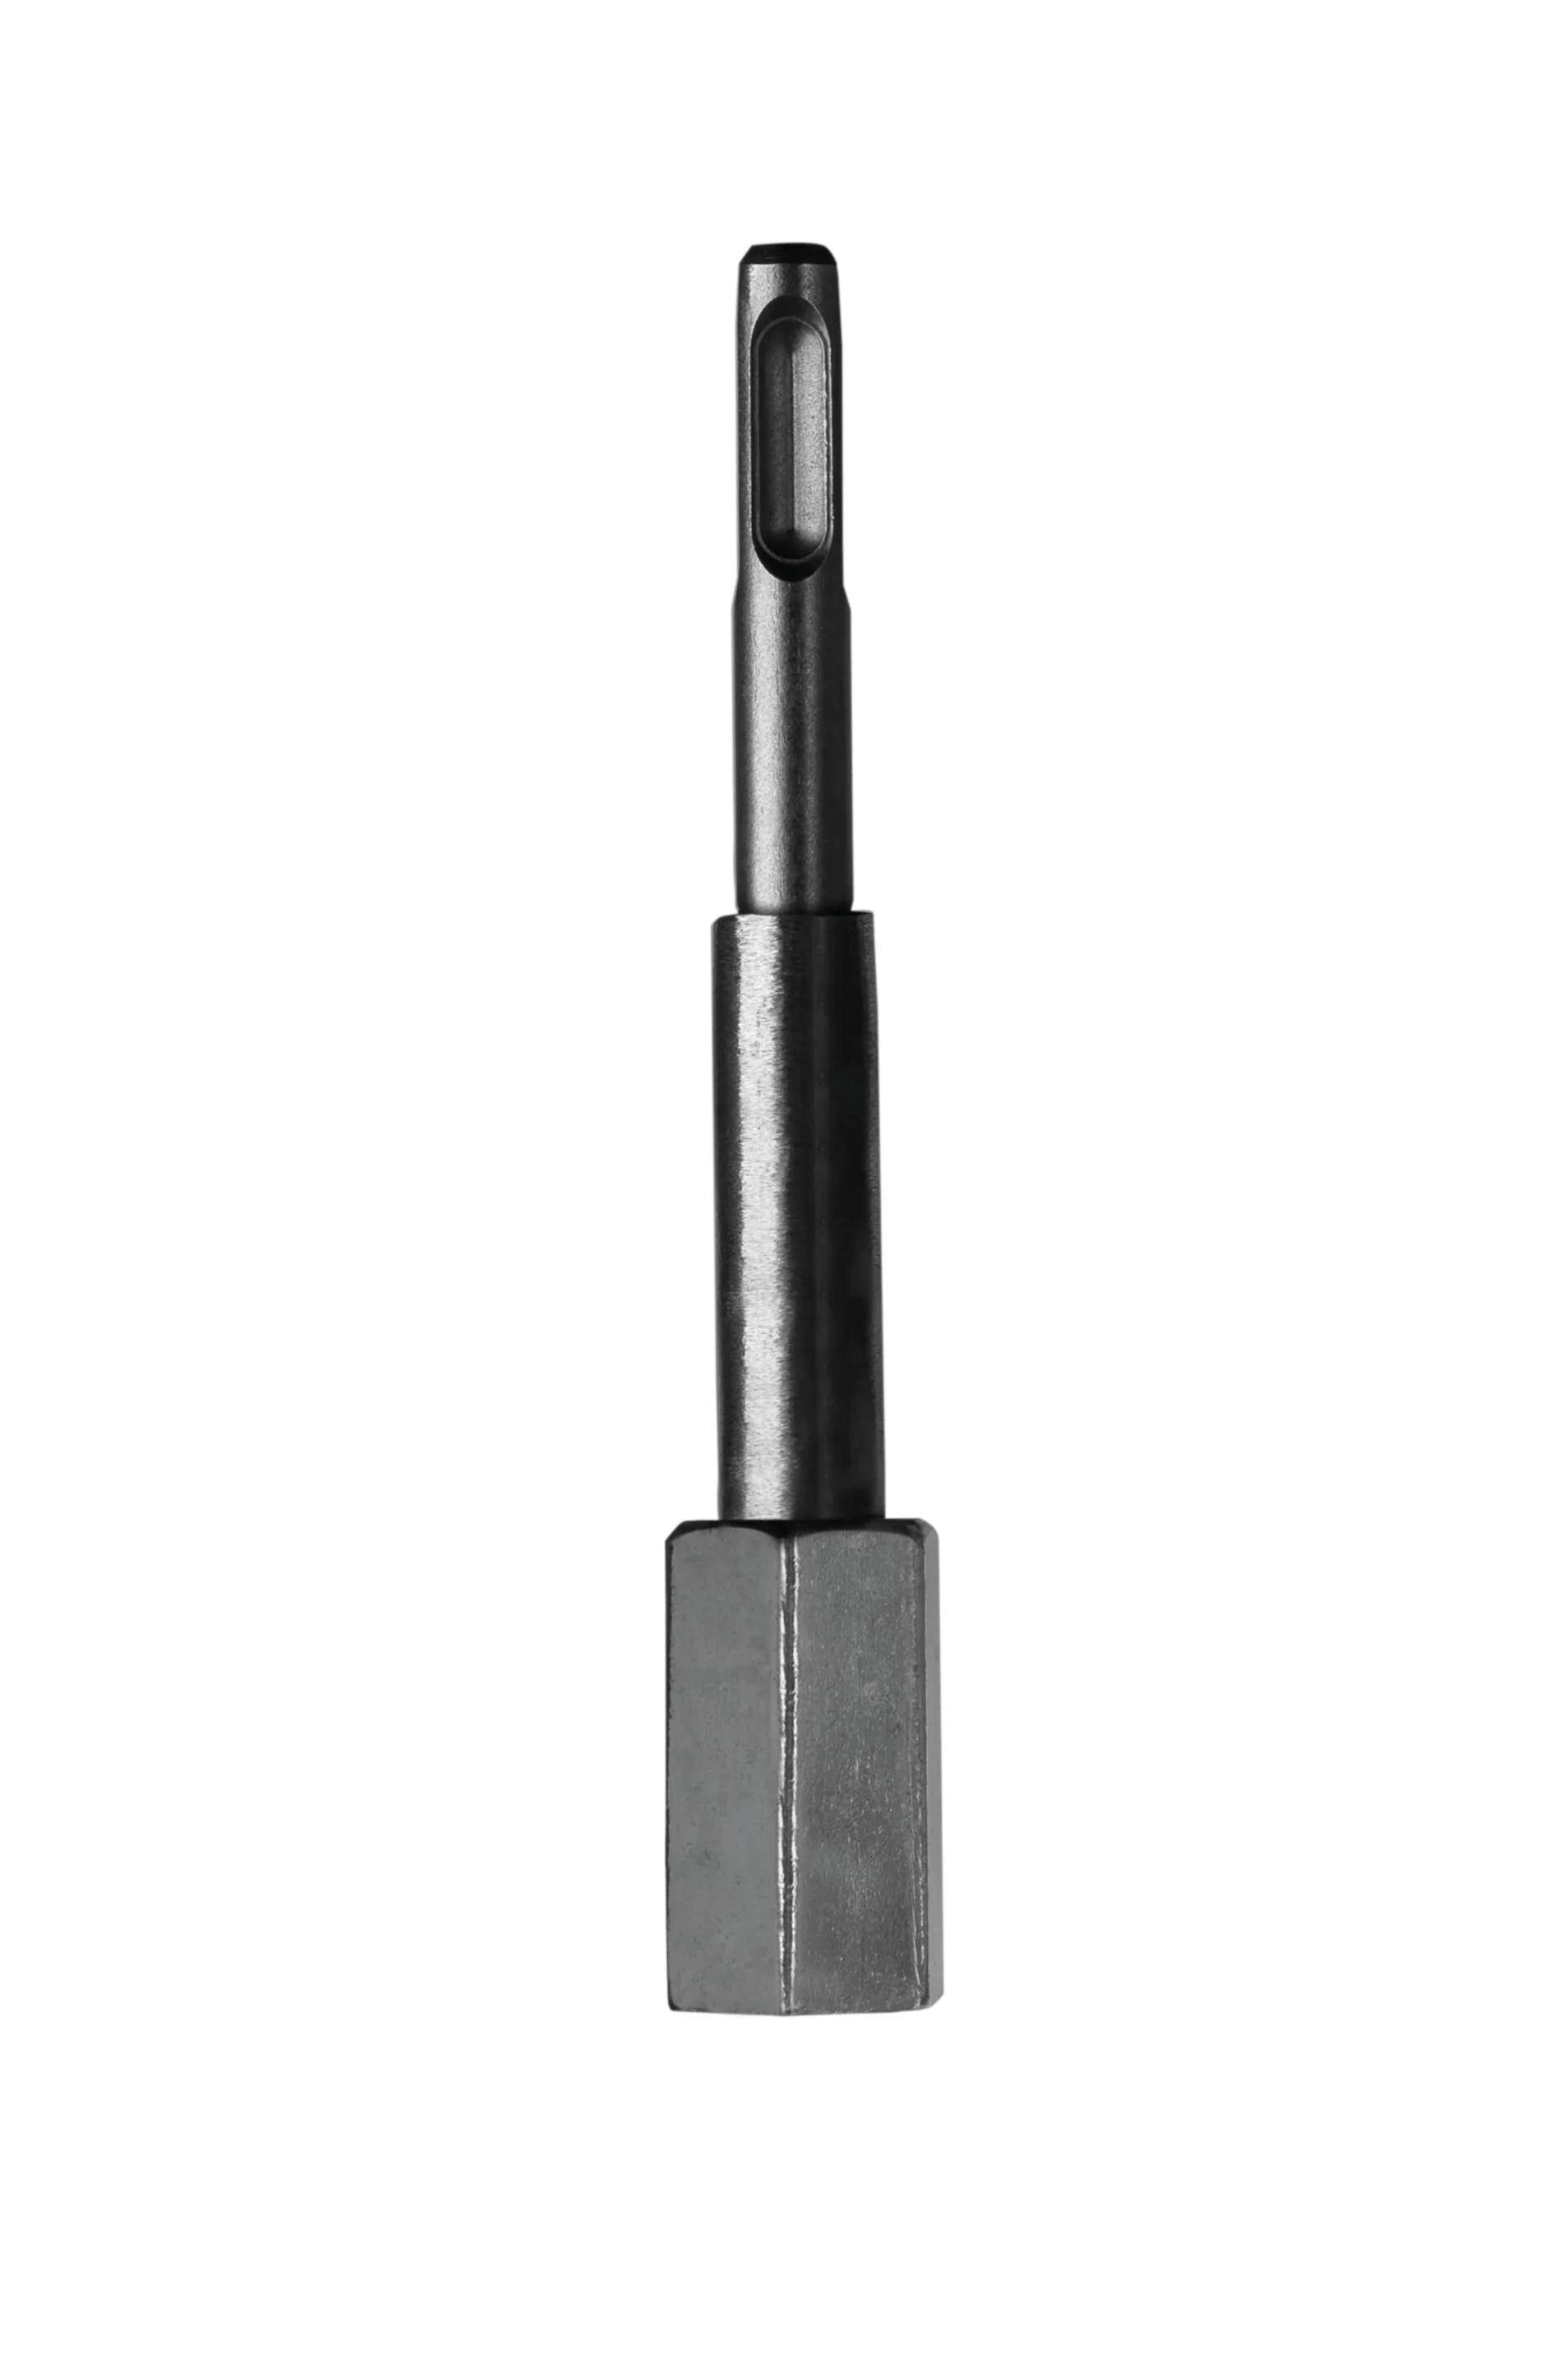 SDS +/ M14 paddle mixer adaptor